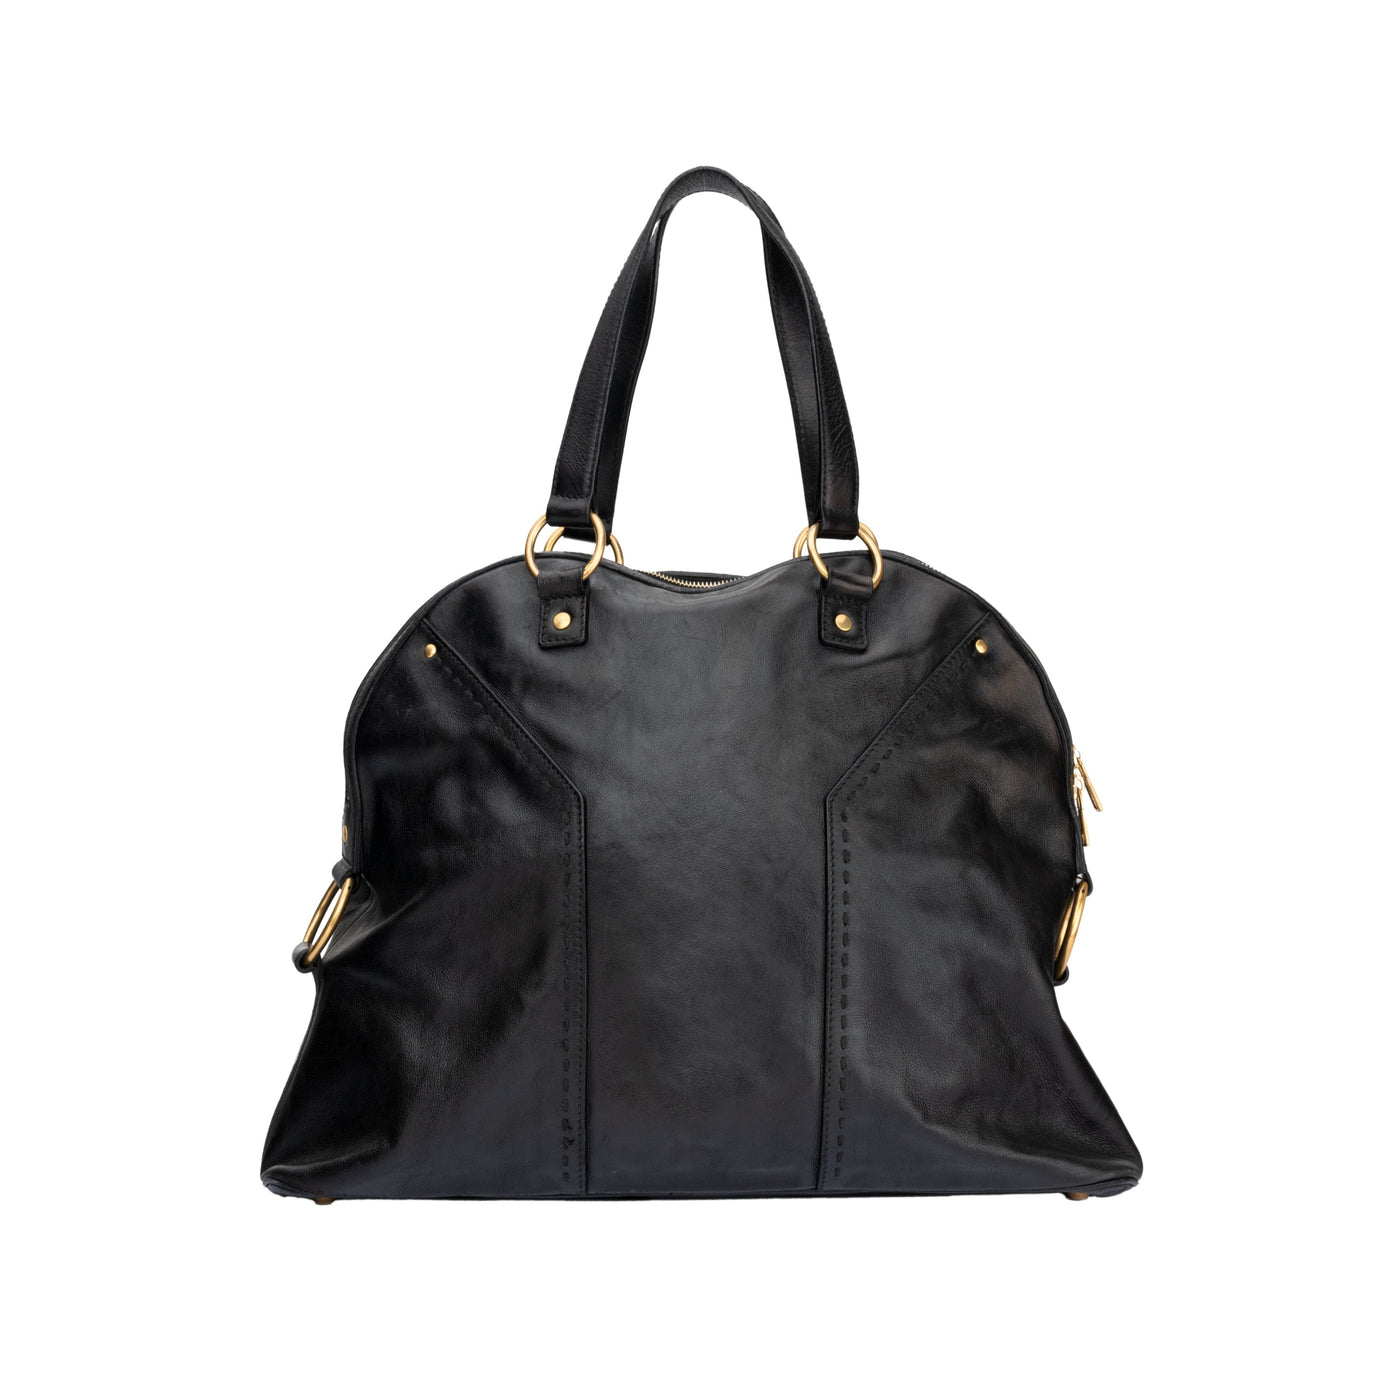 Yves Saint Laurent Muse bag black gold leather NFT pre-owned